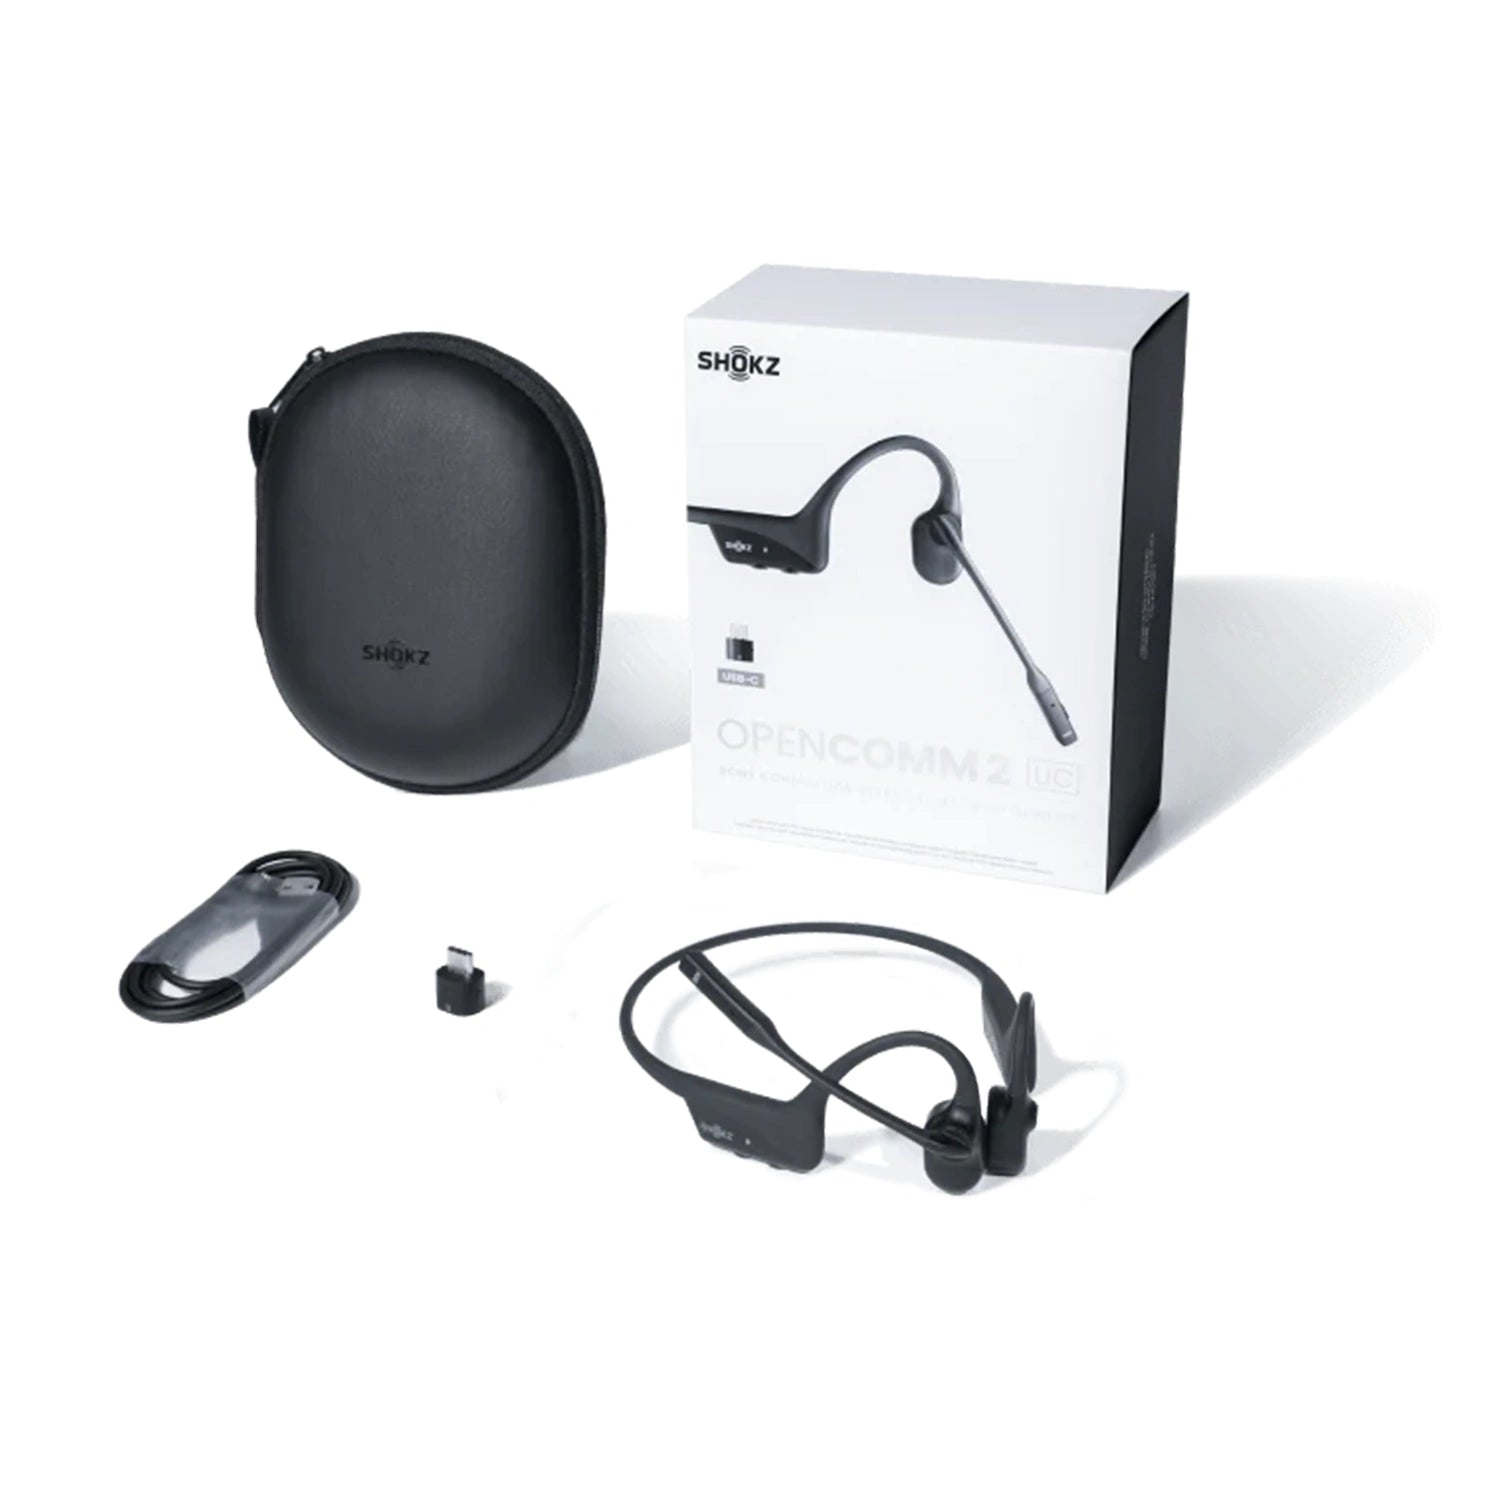  SHOKZ OpenSwim - Bone Conduction MP3 Waterproof Headphones for  Swimming - Open-Ear Wireless Headphones, with Nose Clip and Earplug (Blue)  : Electronics